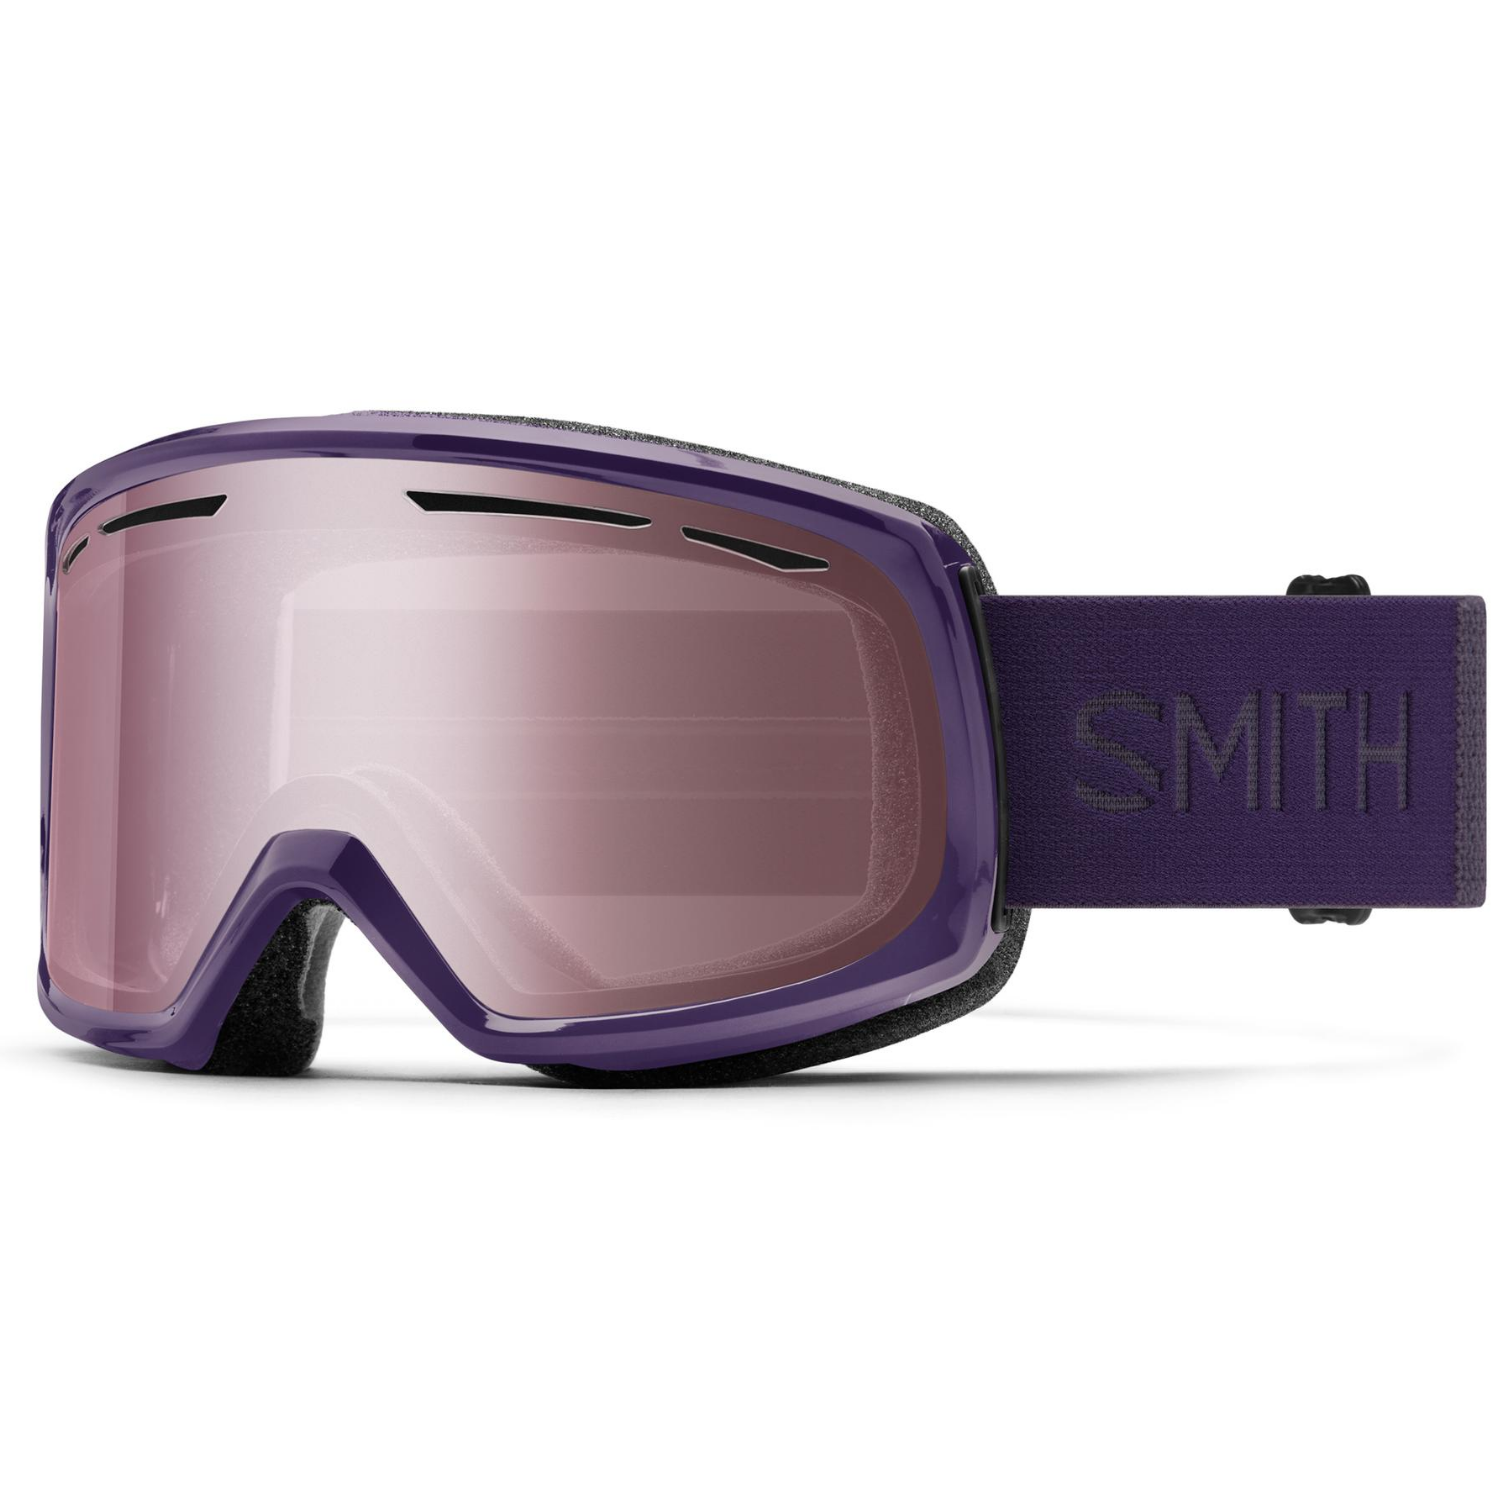 Smith DRIFT 2021 | Women's Goggle